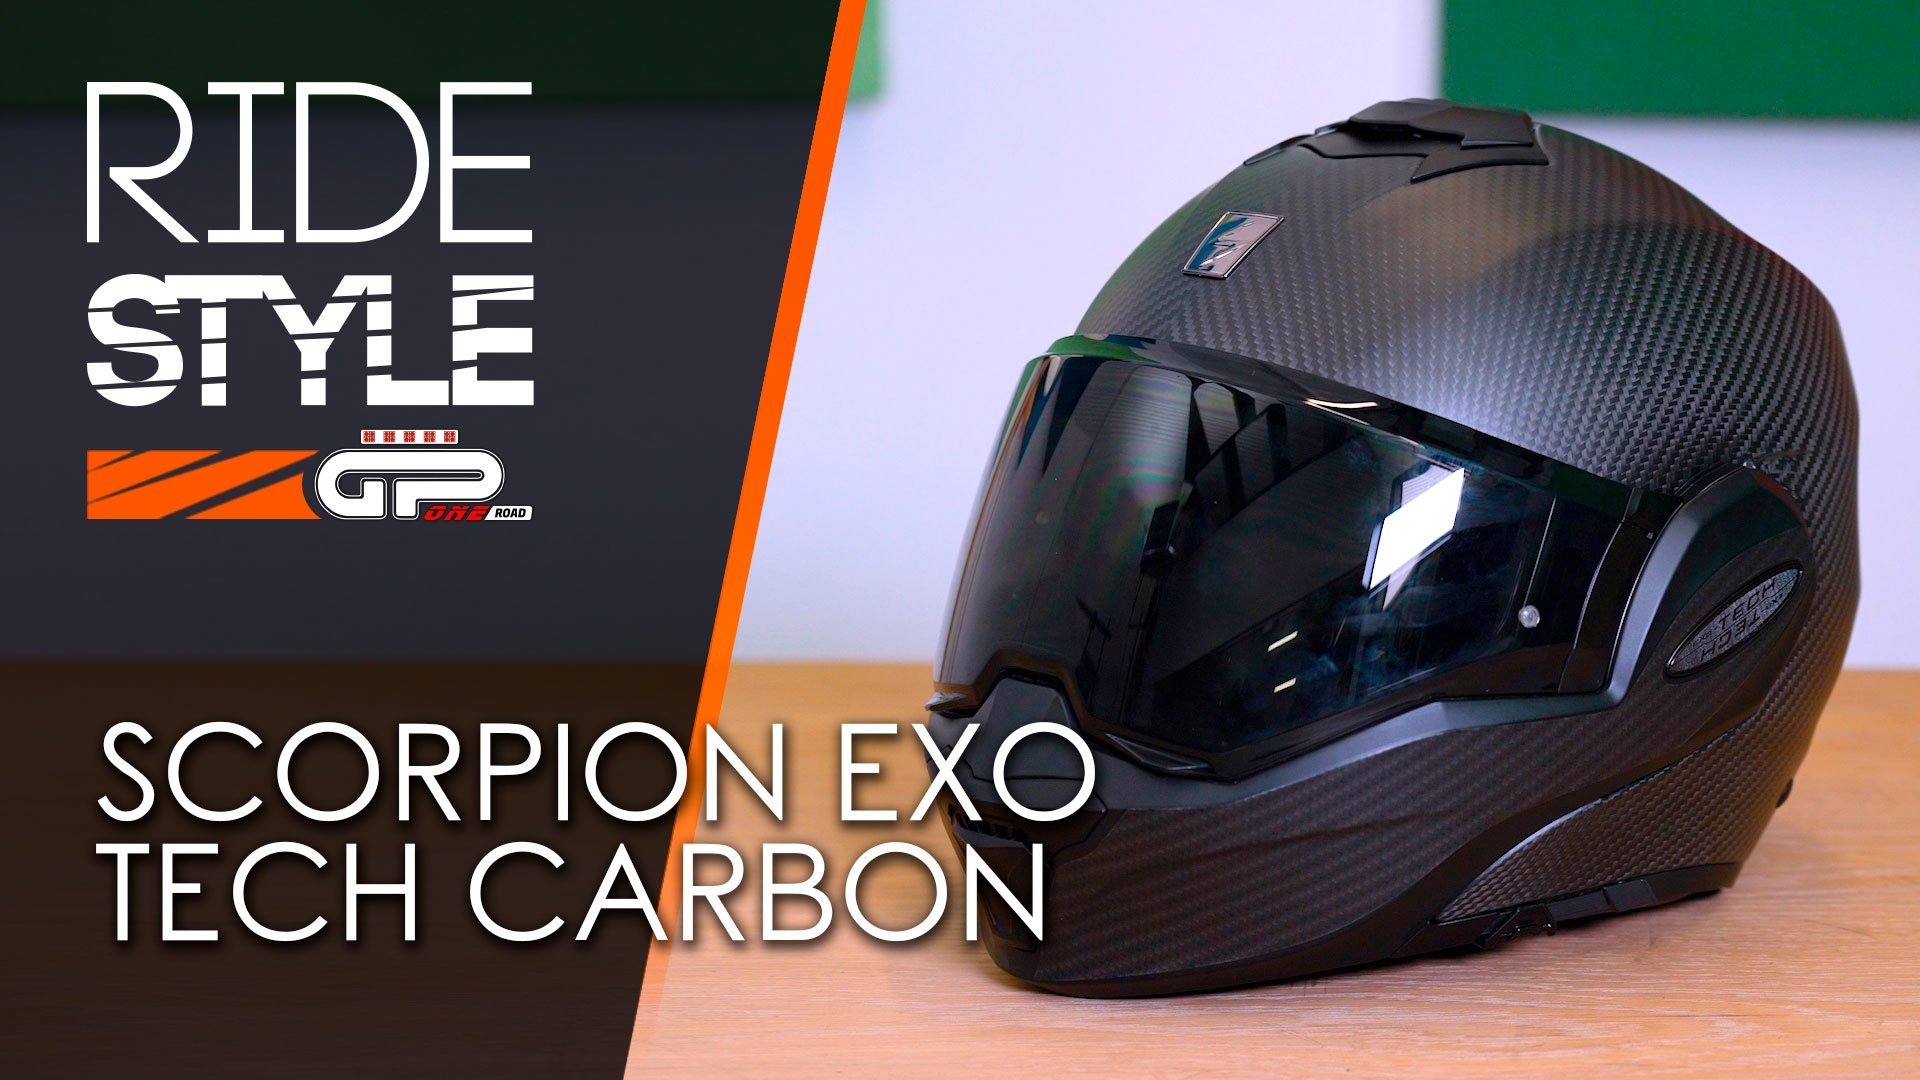 Scorpion Exo Tech Carbon, RideStyle